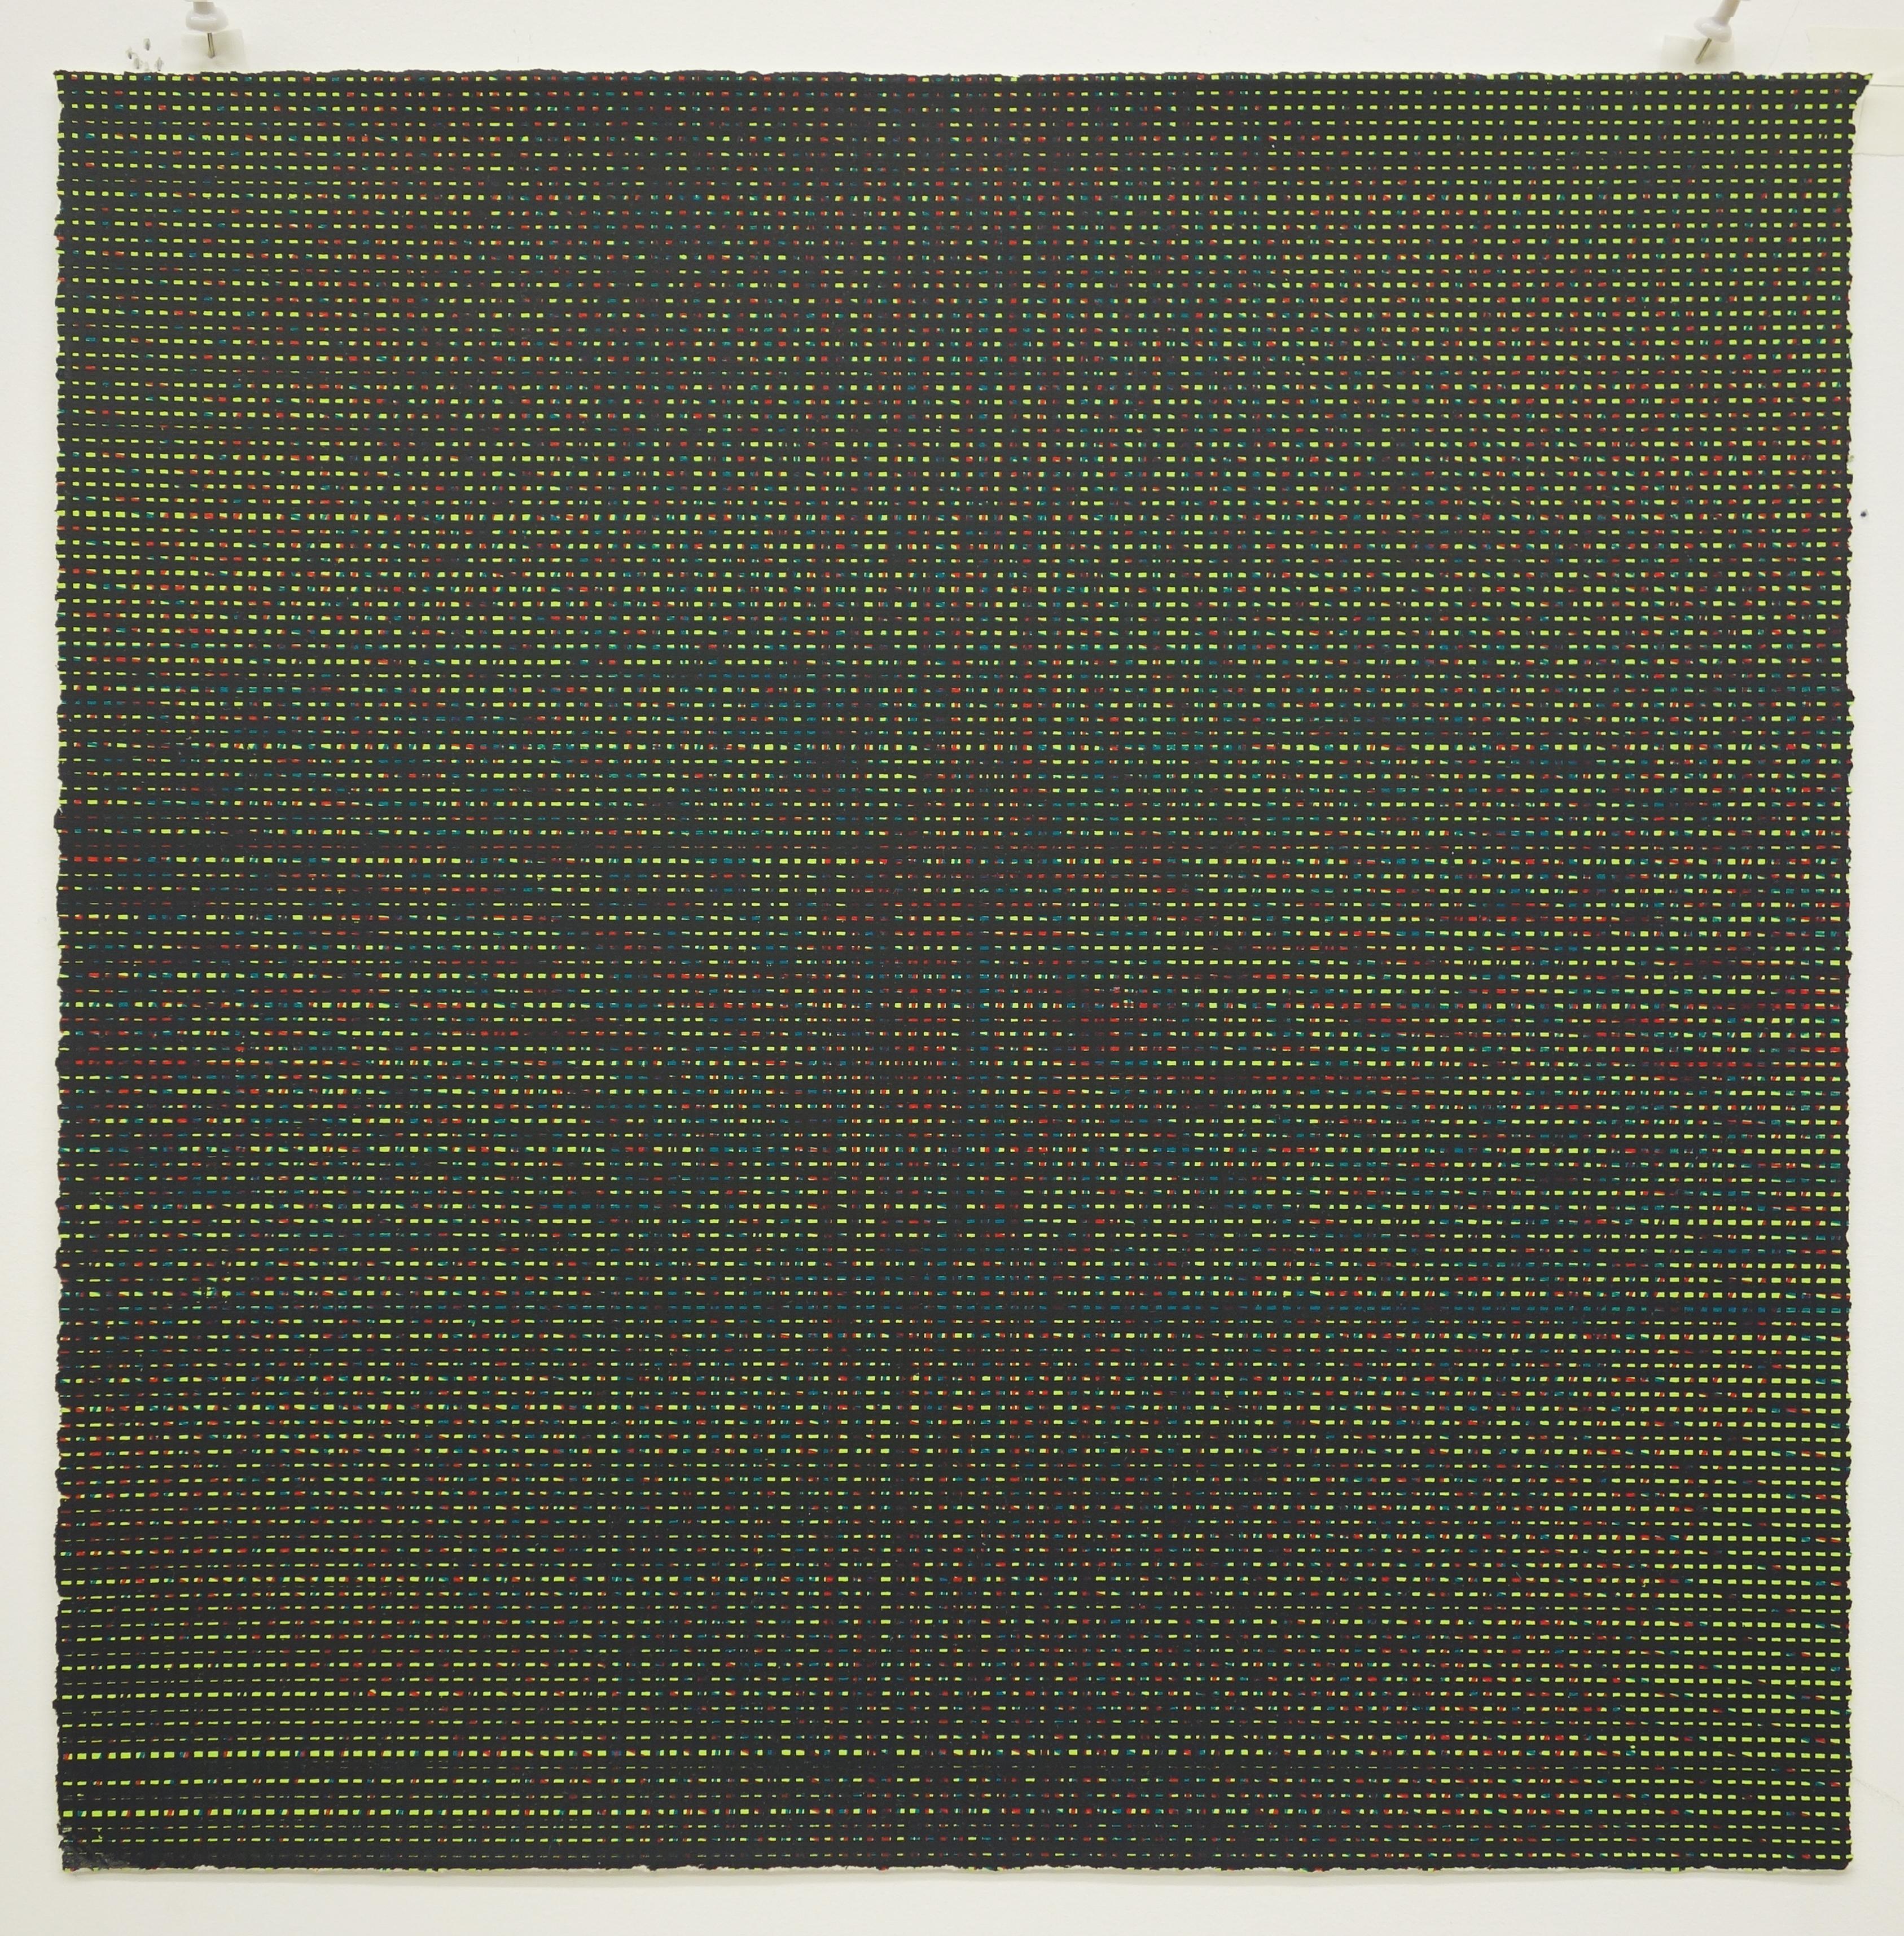 Rob de Oude, Untitled-Wassaic 1, 2016, silkscreen, 18 x 18 inches, Suite of 10 4